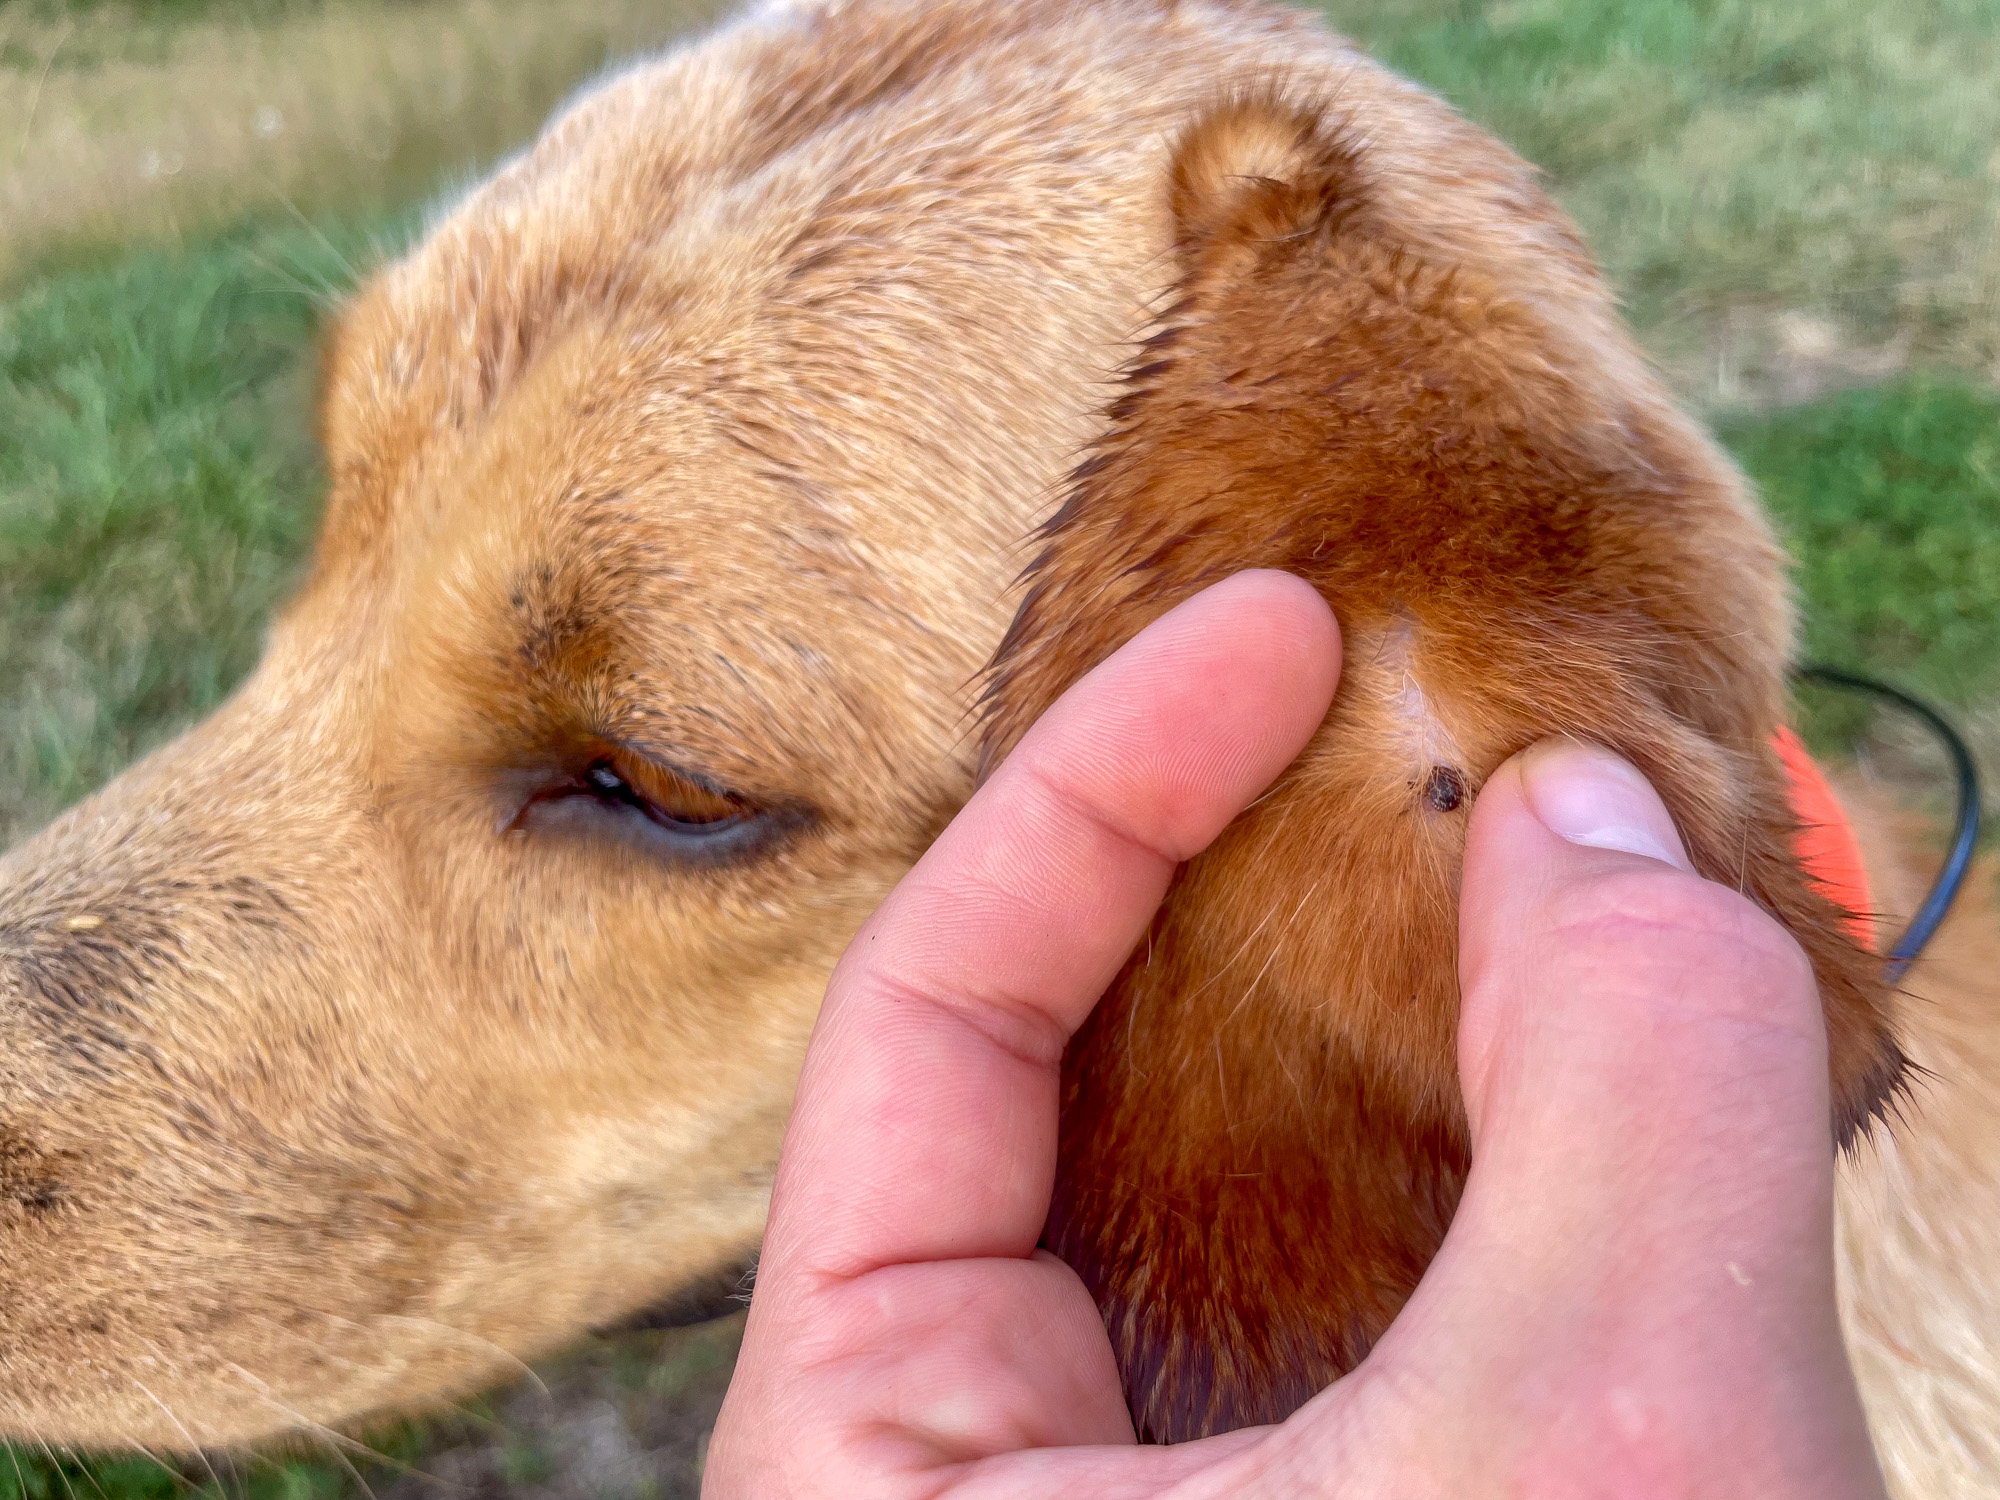 A tick embedded in a Labrador's ear.